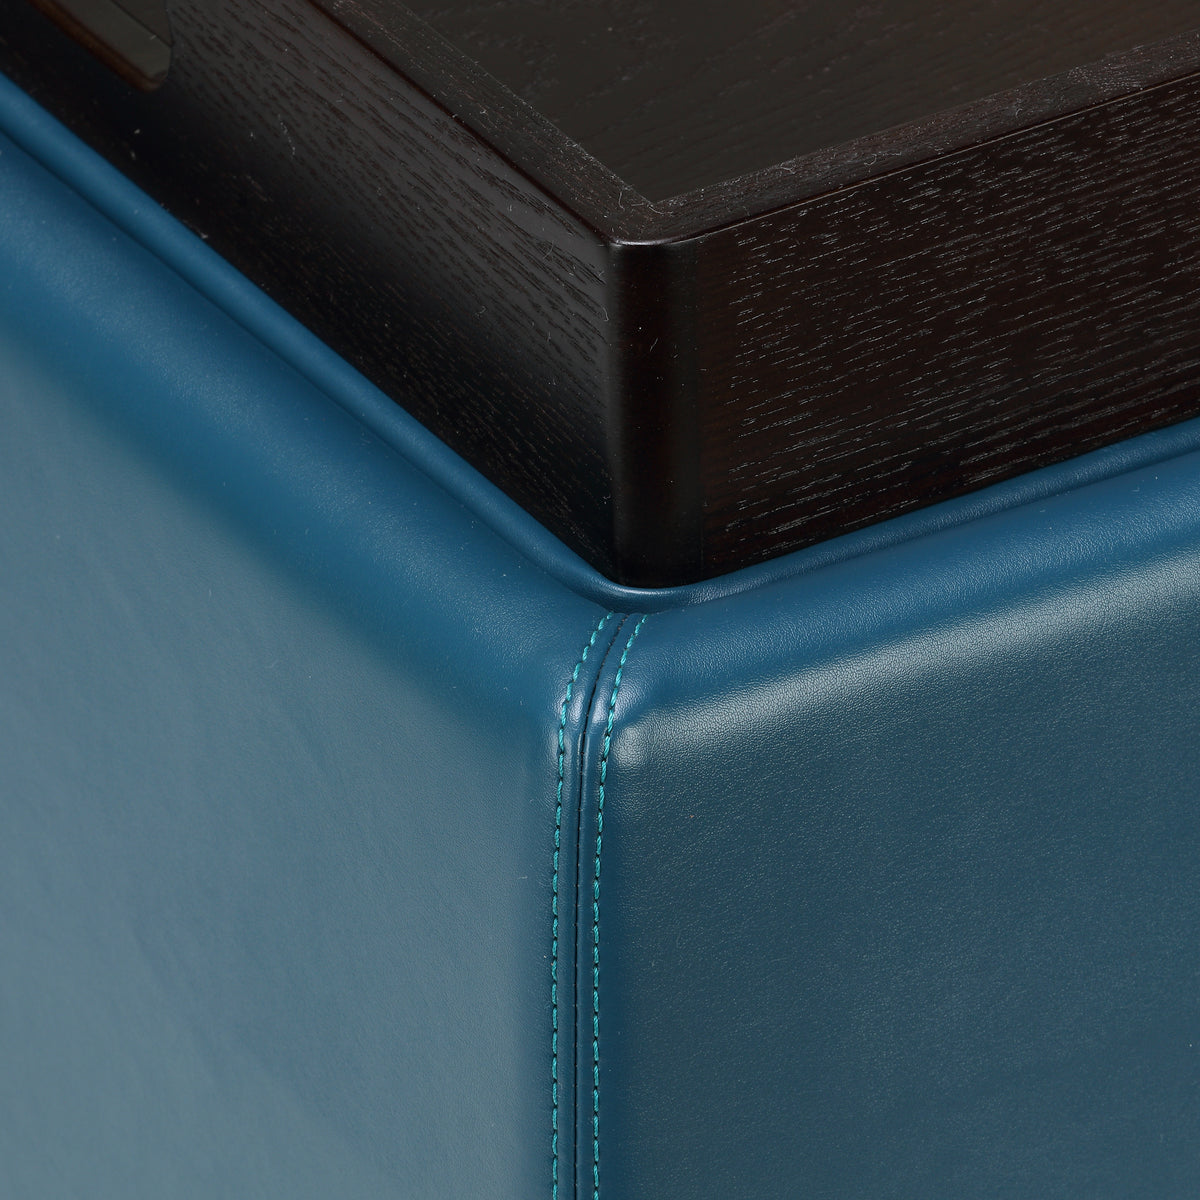 Cortesi Home Mavi Storage Tray Ottoman in Bonded Leather, Deep Turquoise Blue